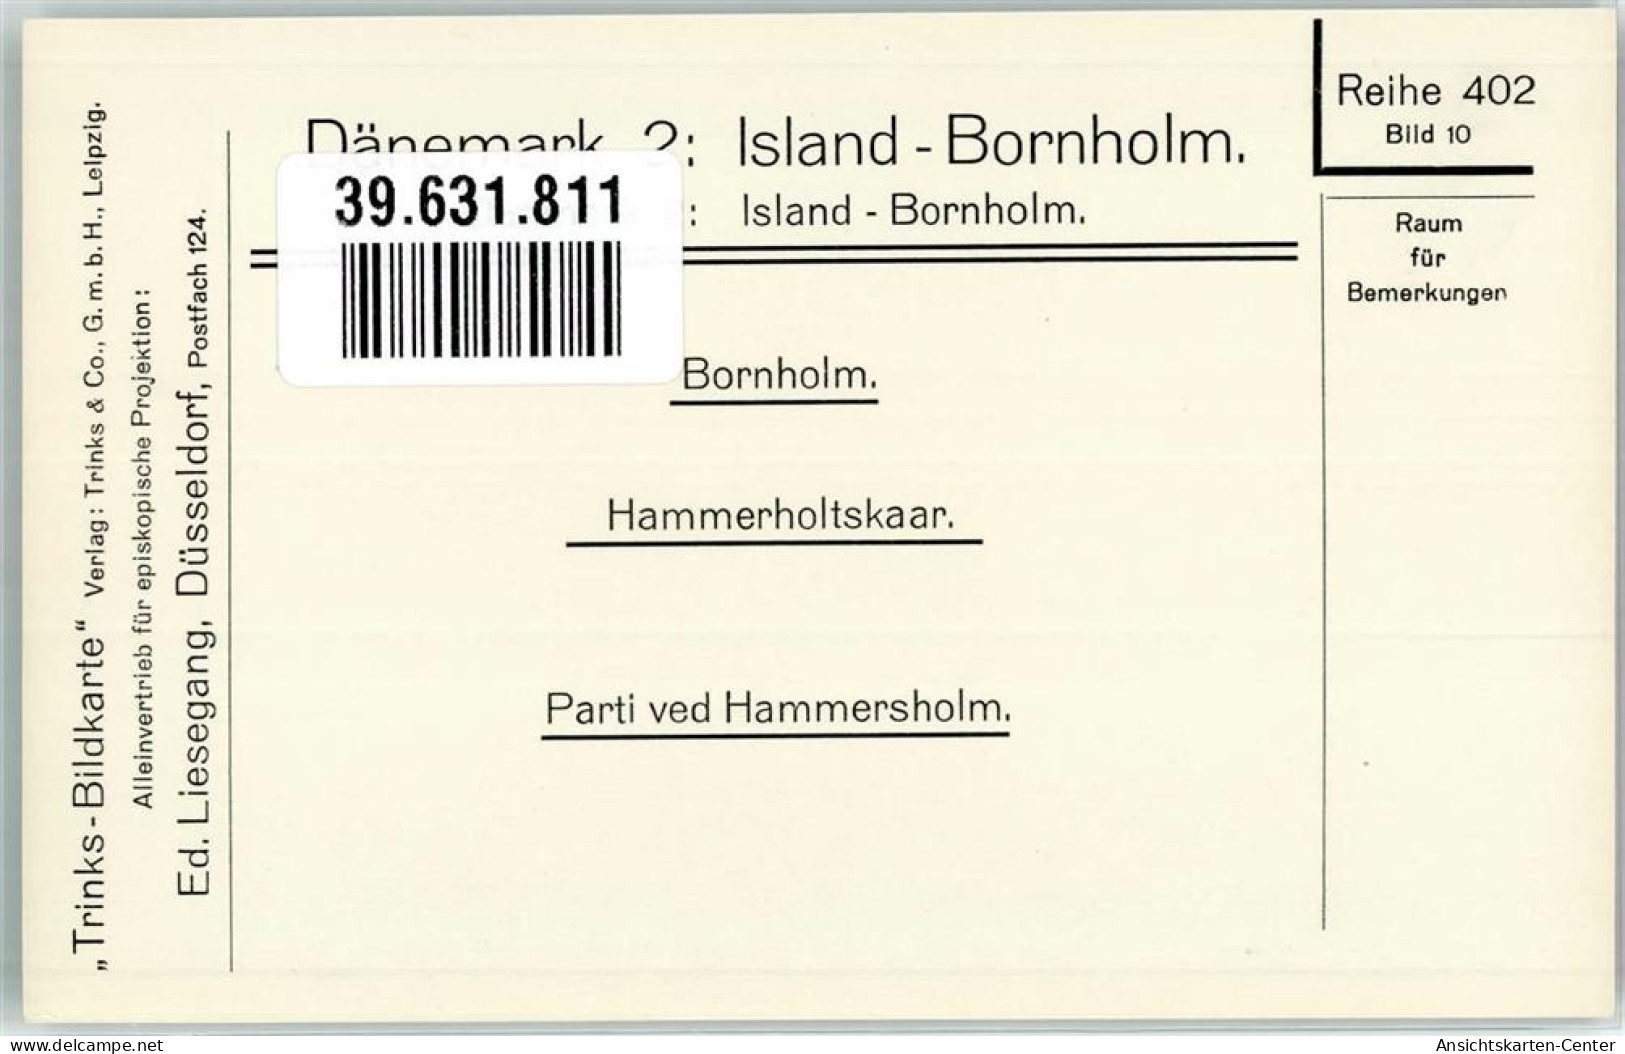 39631811 - Bornholm - Denmark